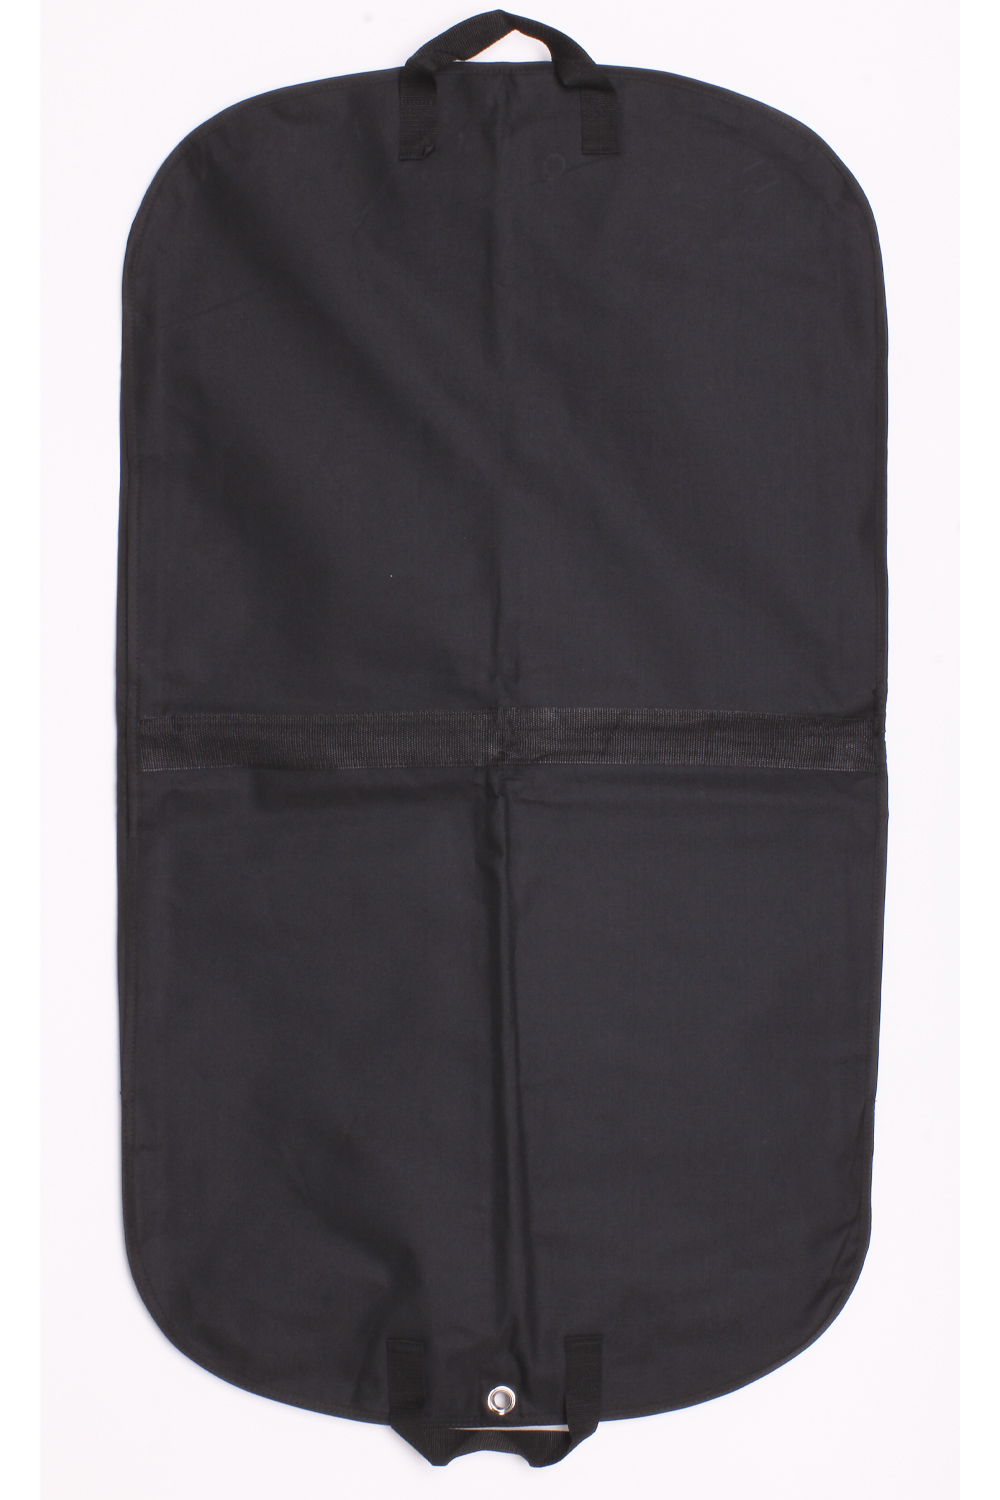 Kilt Outfit Carrier Bag  - Outdside View, Unfolded